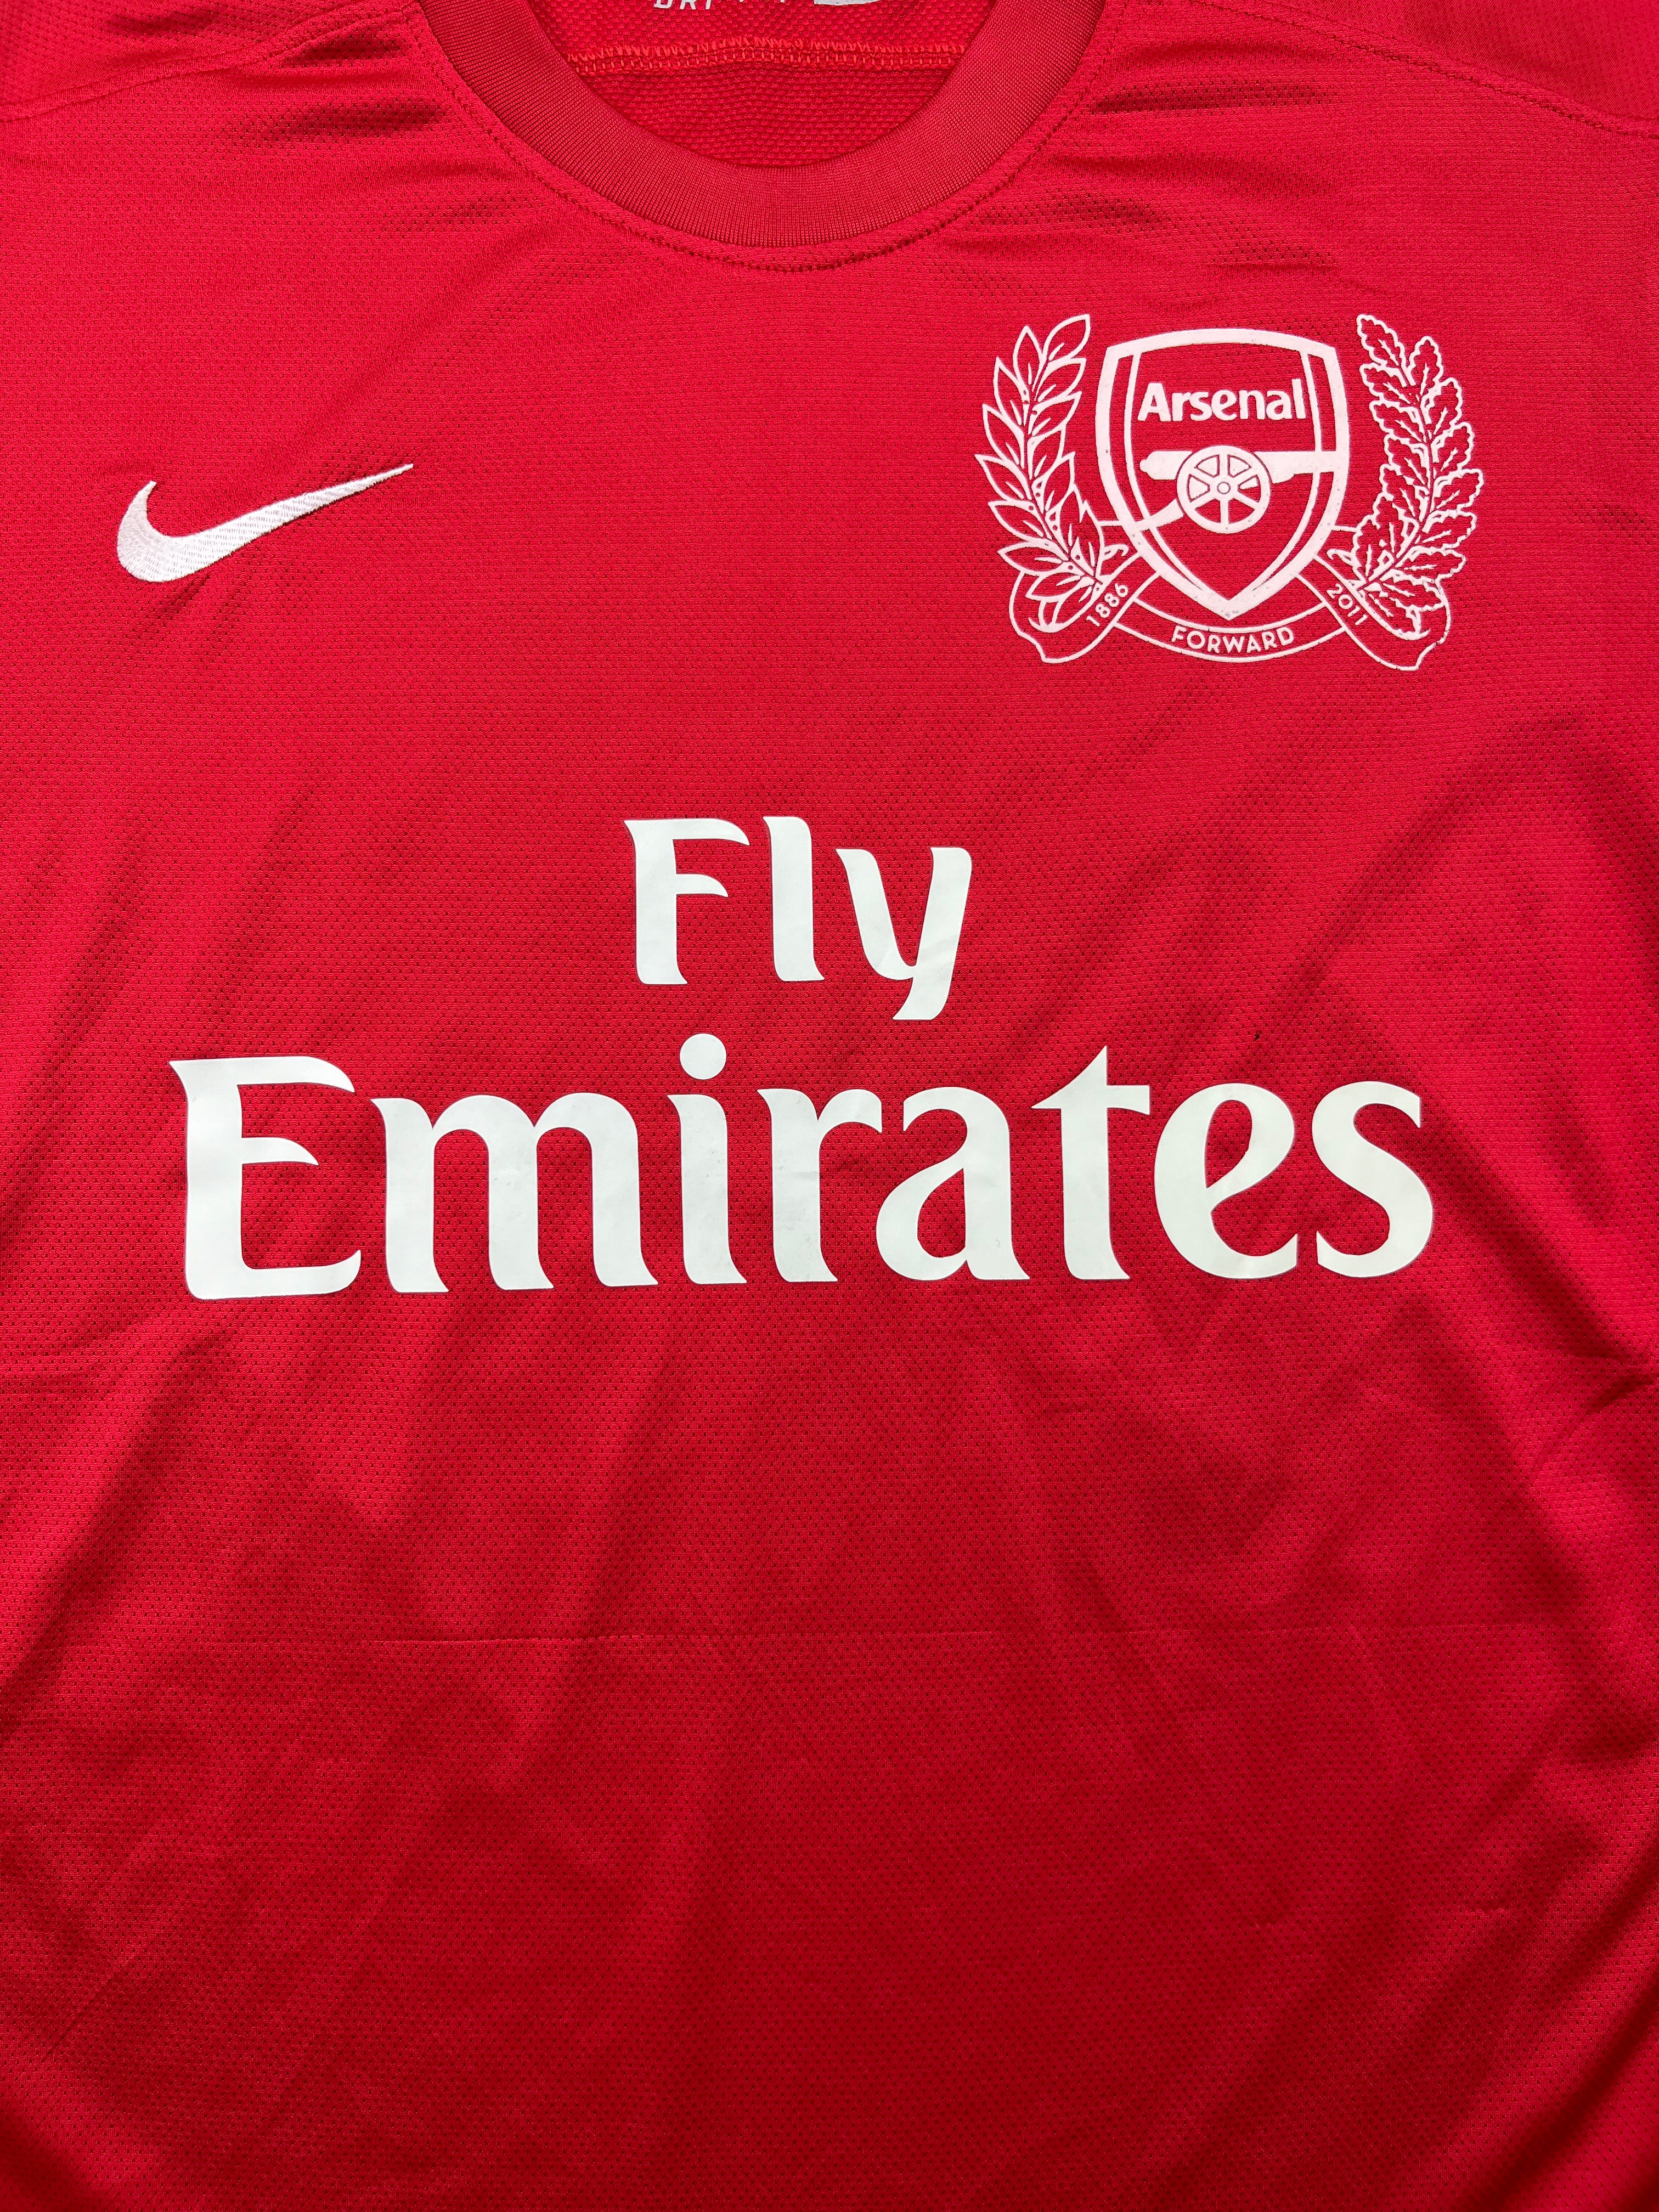 2011/12 Arsenal ‘125th Anniversary’ Home Shirt v.Persie #10 (M) 9/10